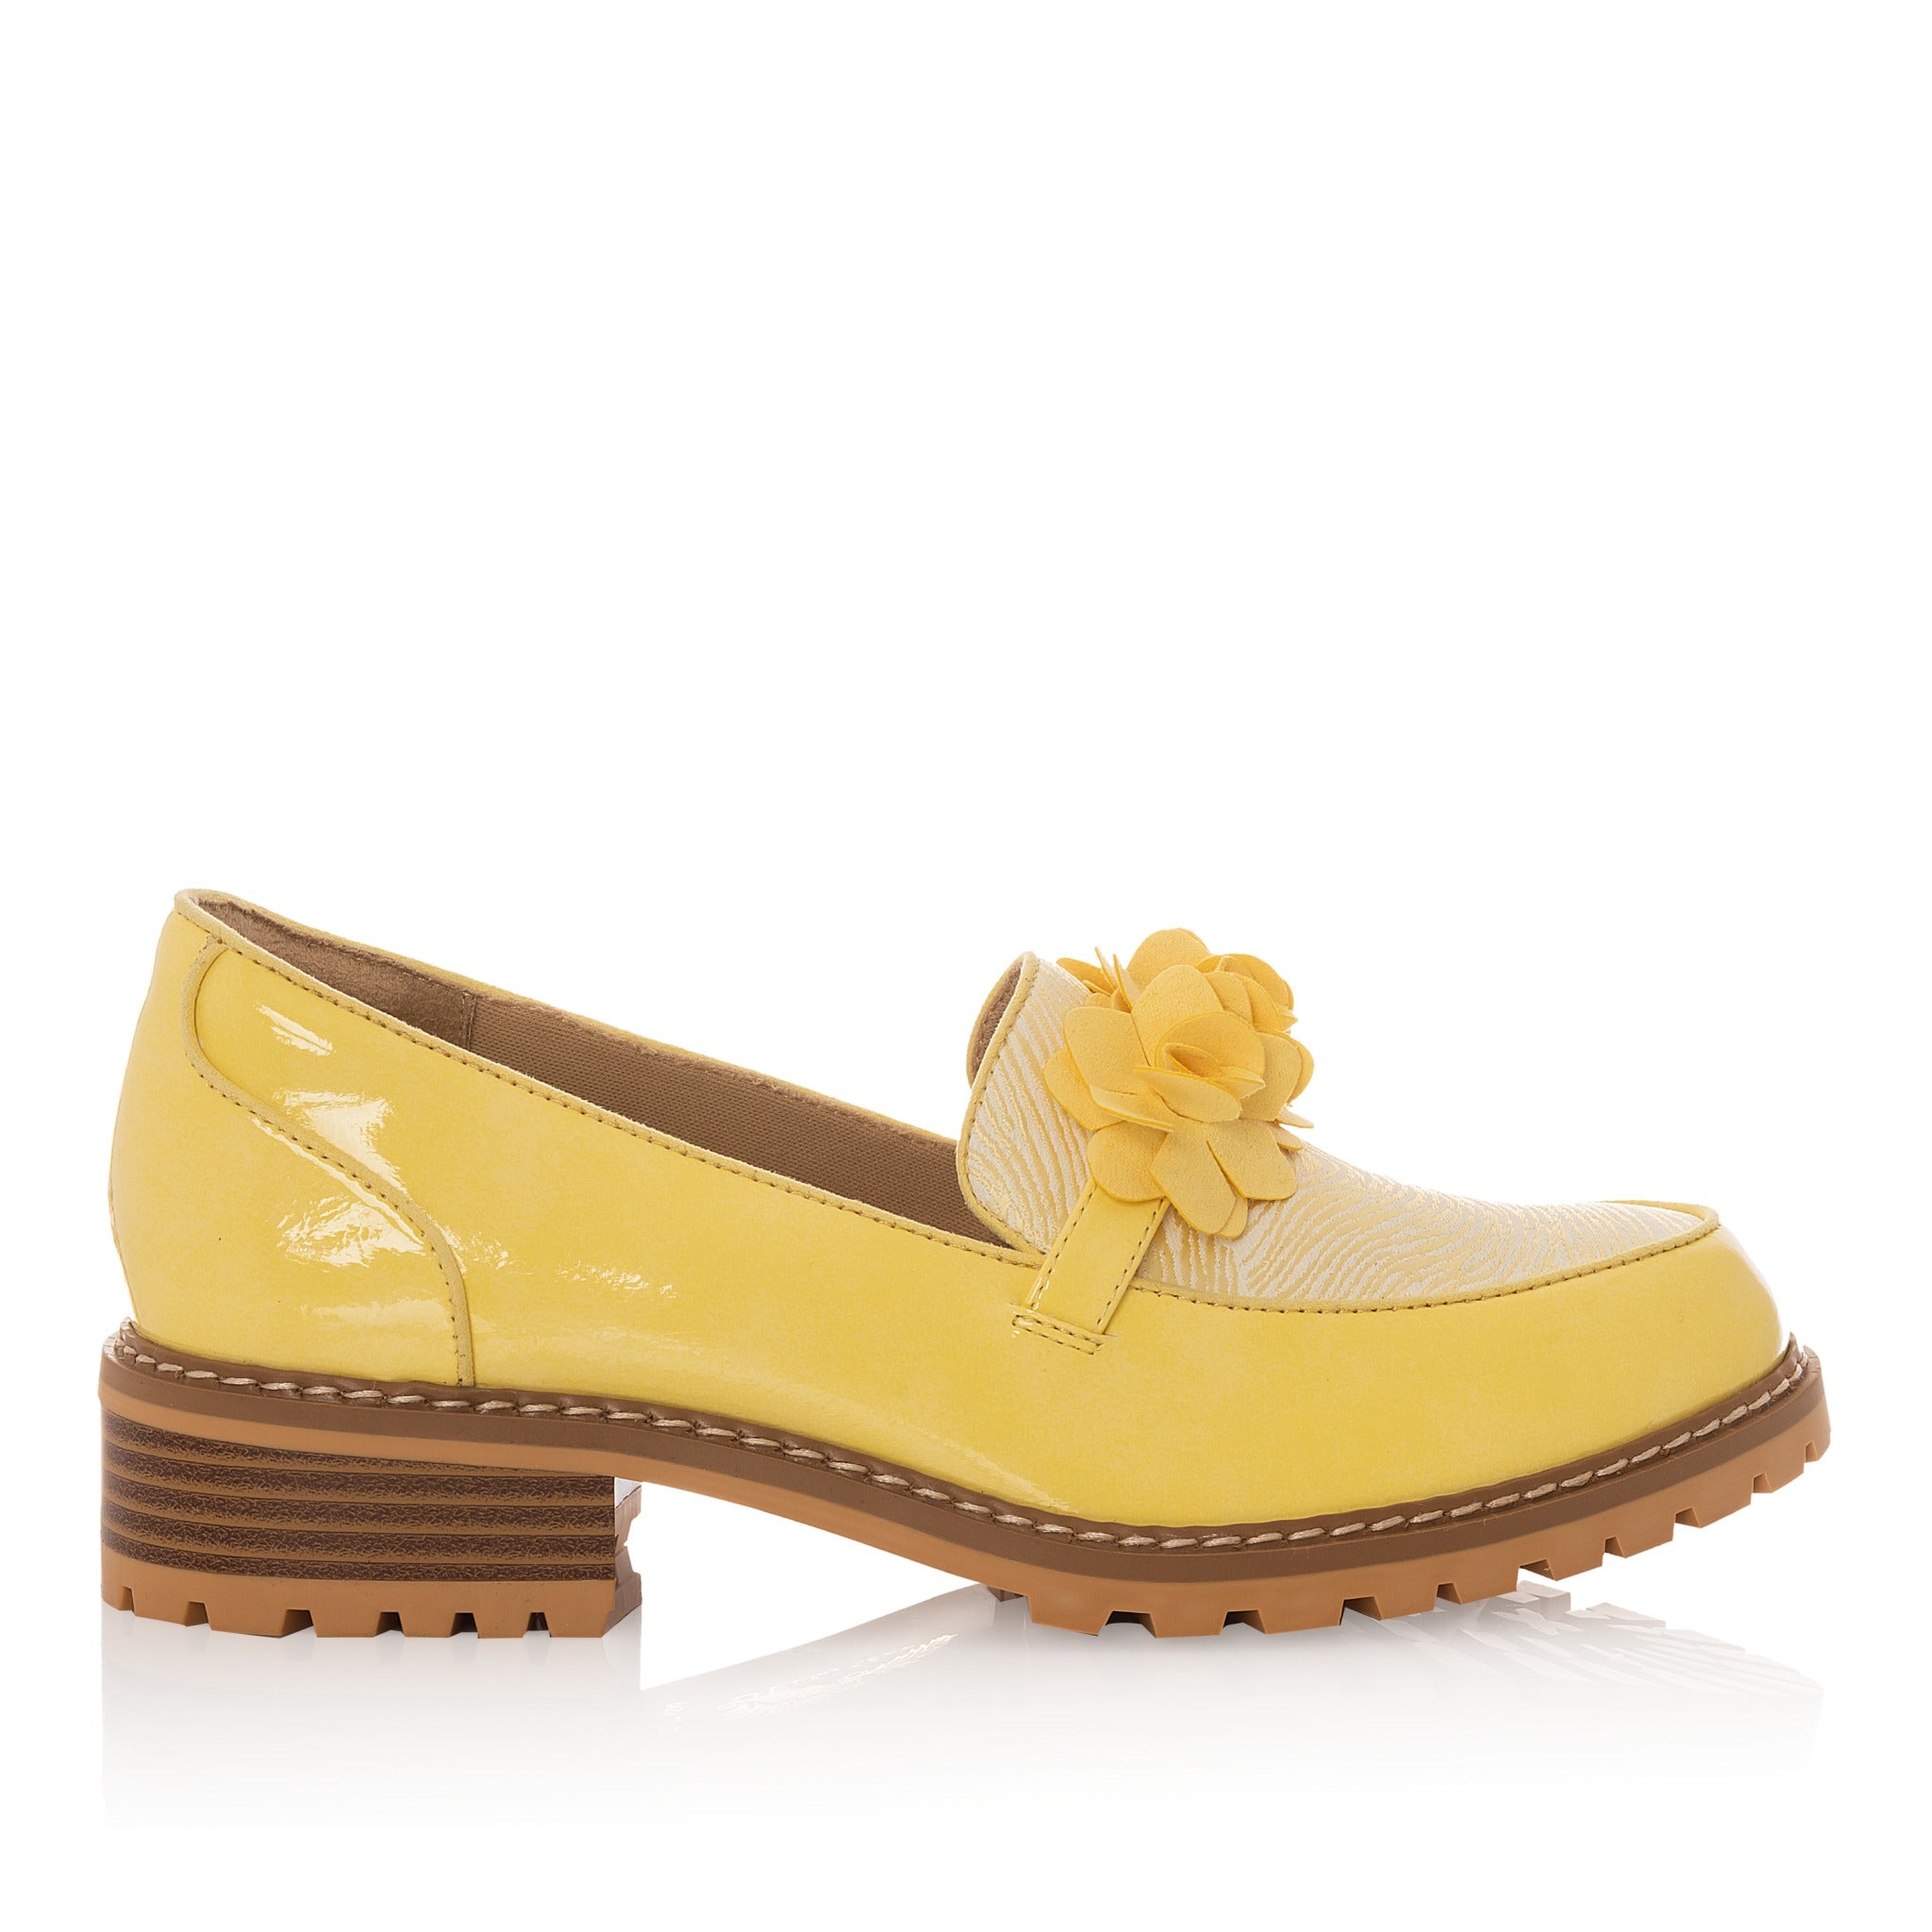 Ruby Shoo Gigi Banana Yellow Loafers